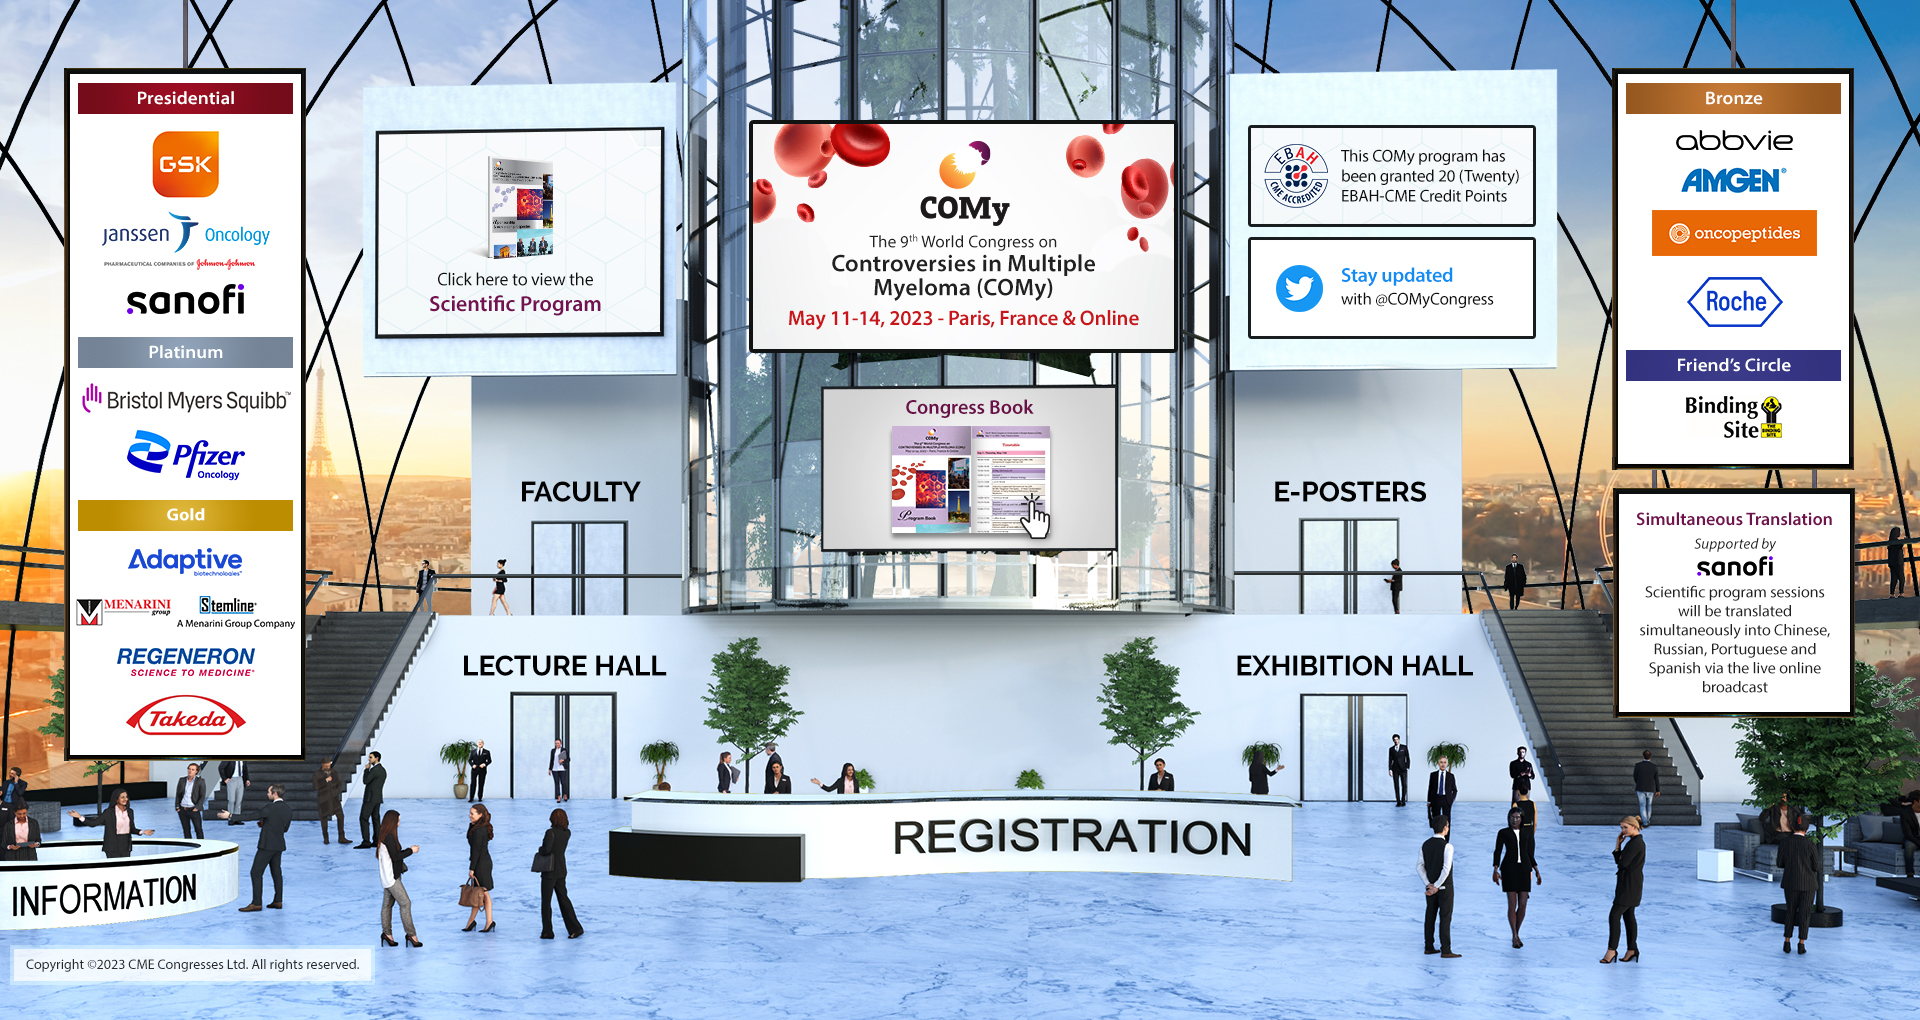 The 9th COMy World Congress